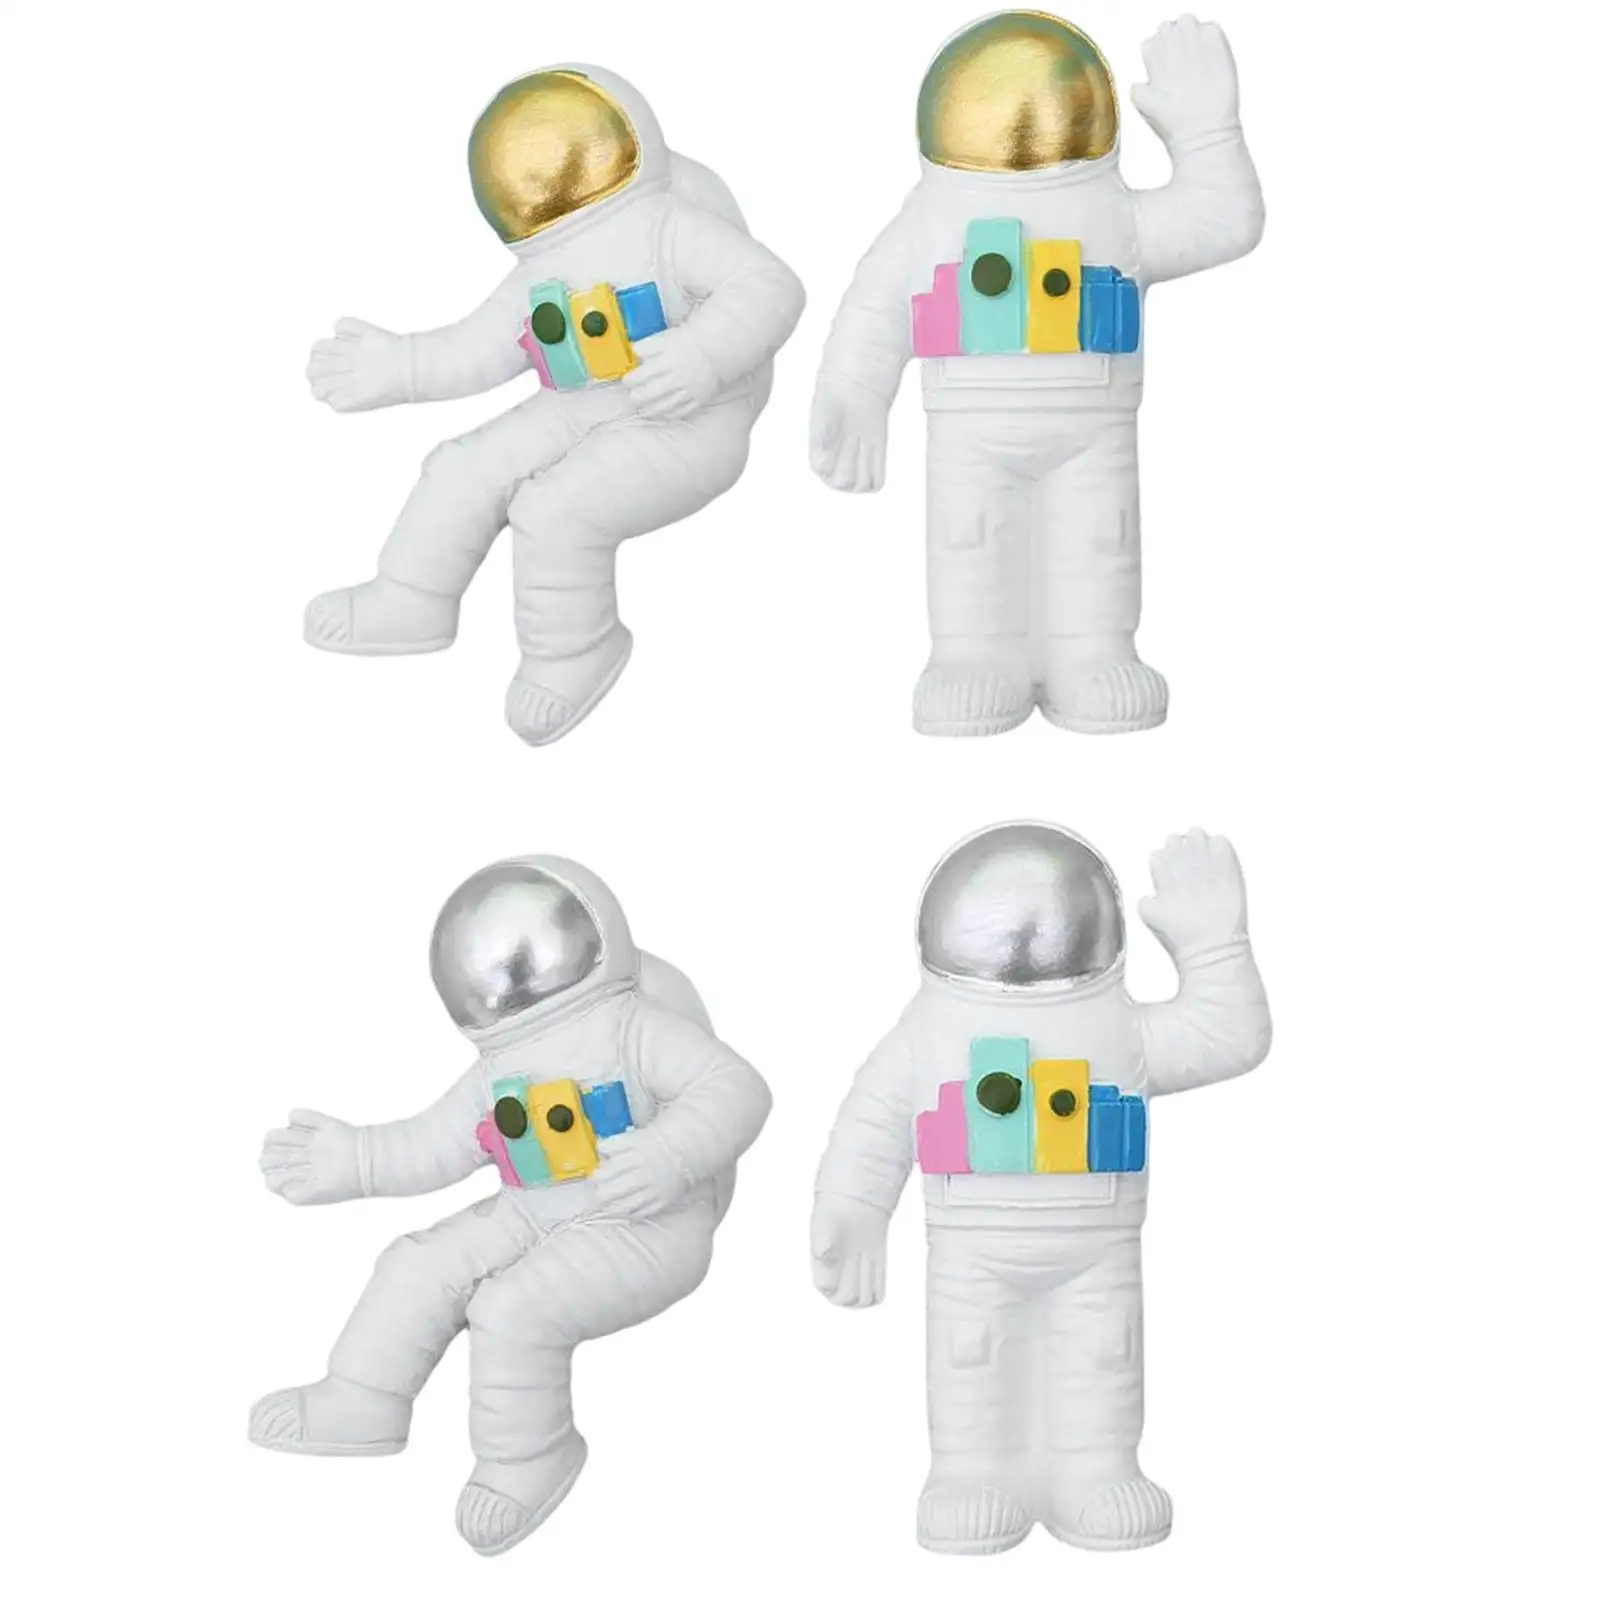 Novelty Refrigerator Magnets Waving Astronaut Astronaut for Kitchen